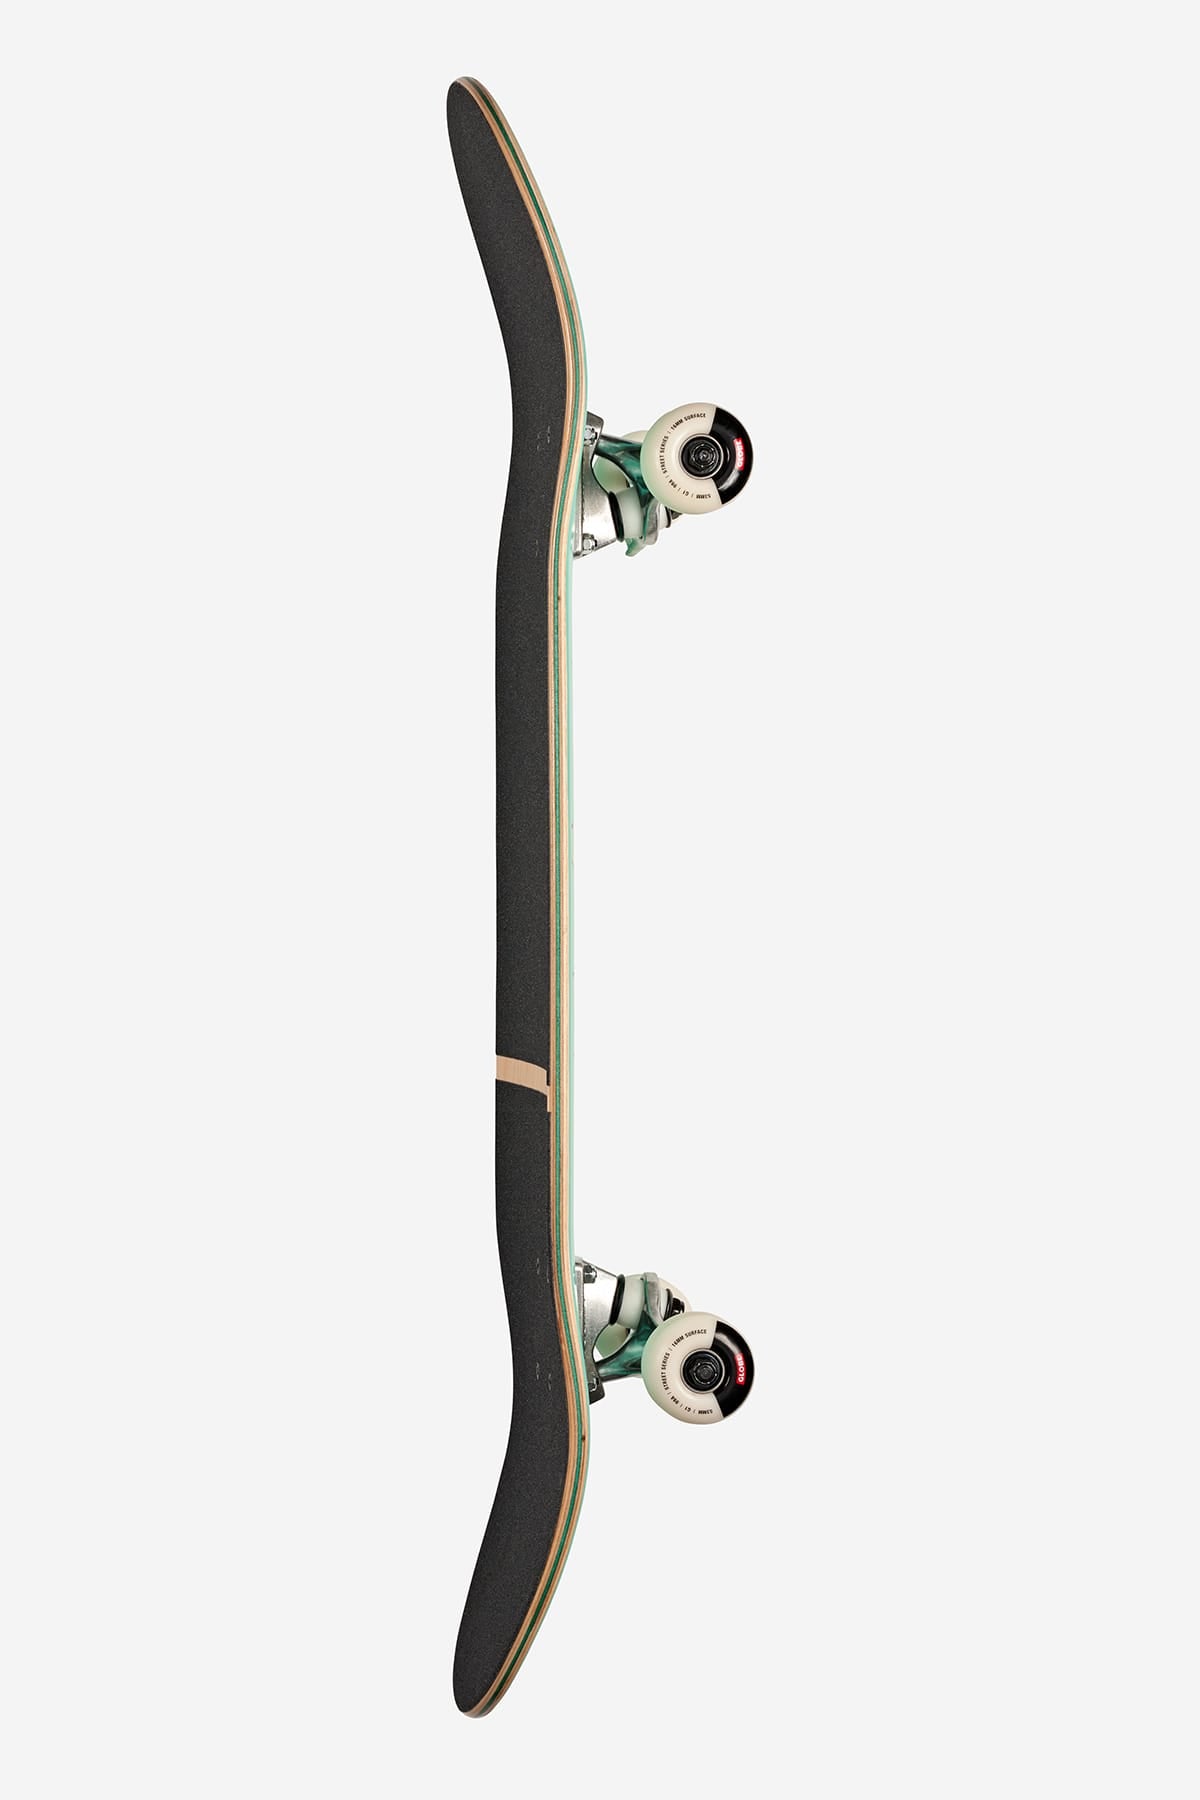 Globe - G1 Digital Nurture - Beauté synthétique - 8.25" complet Skateboard